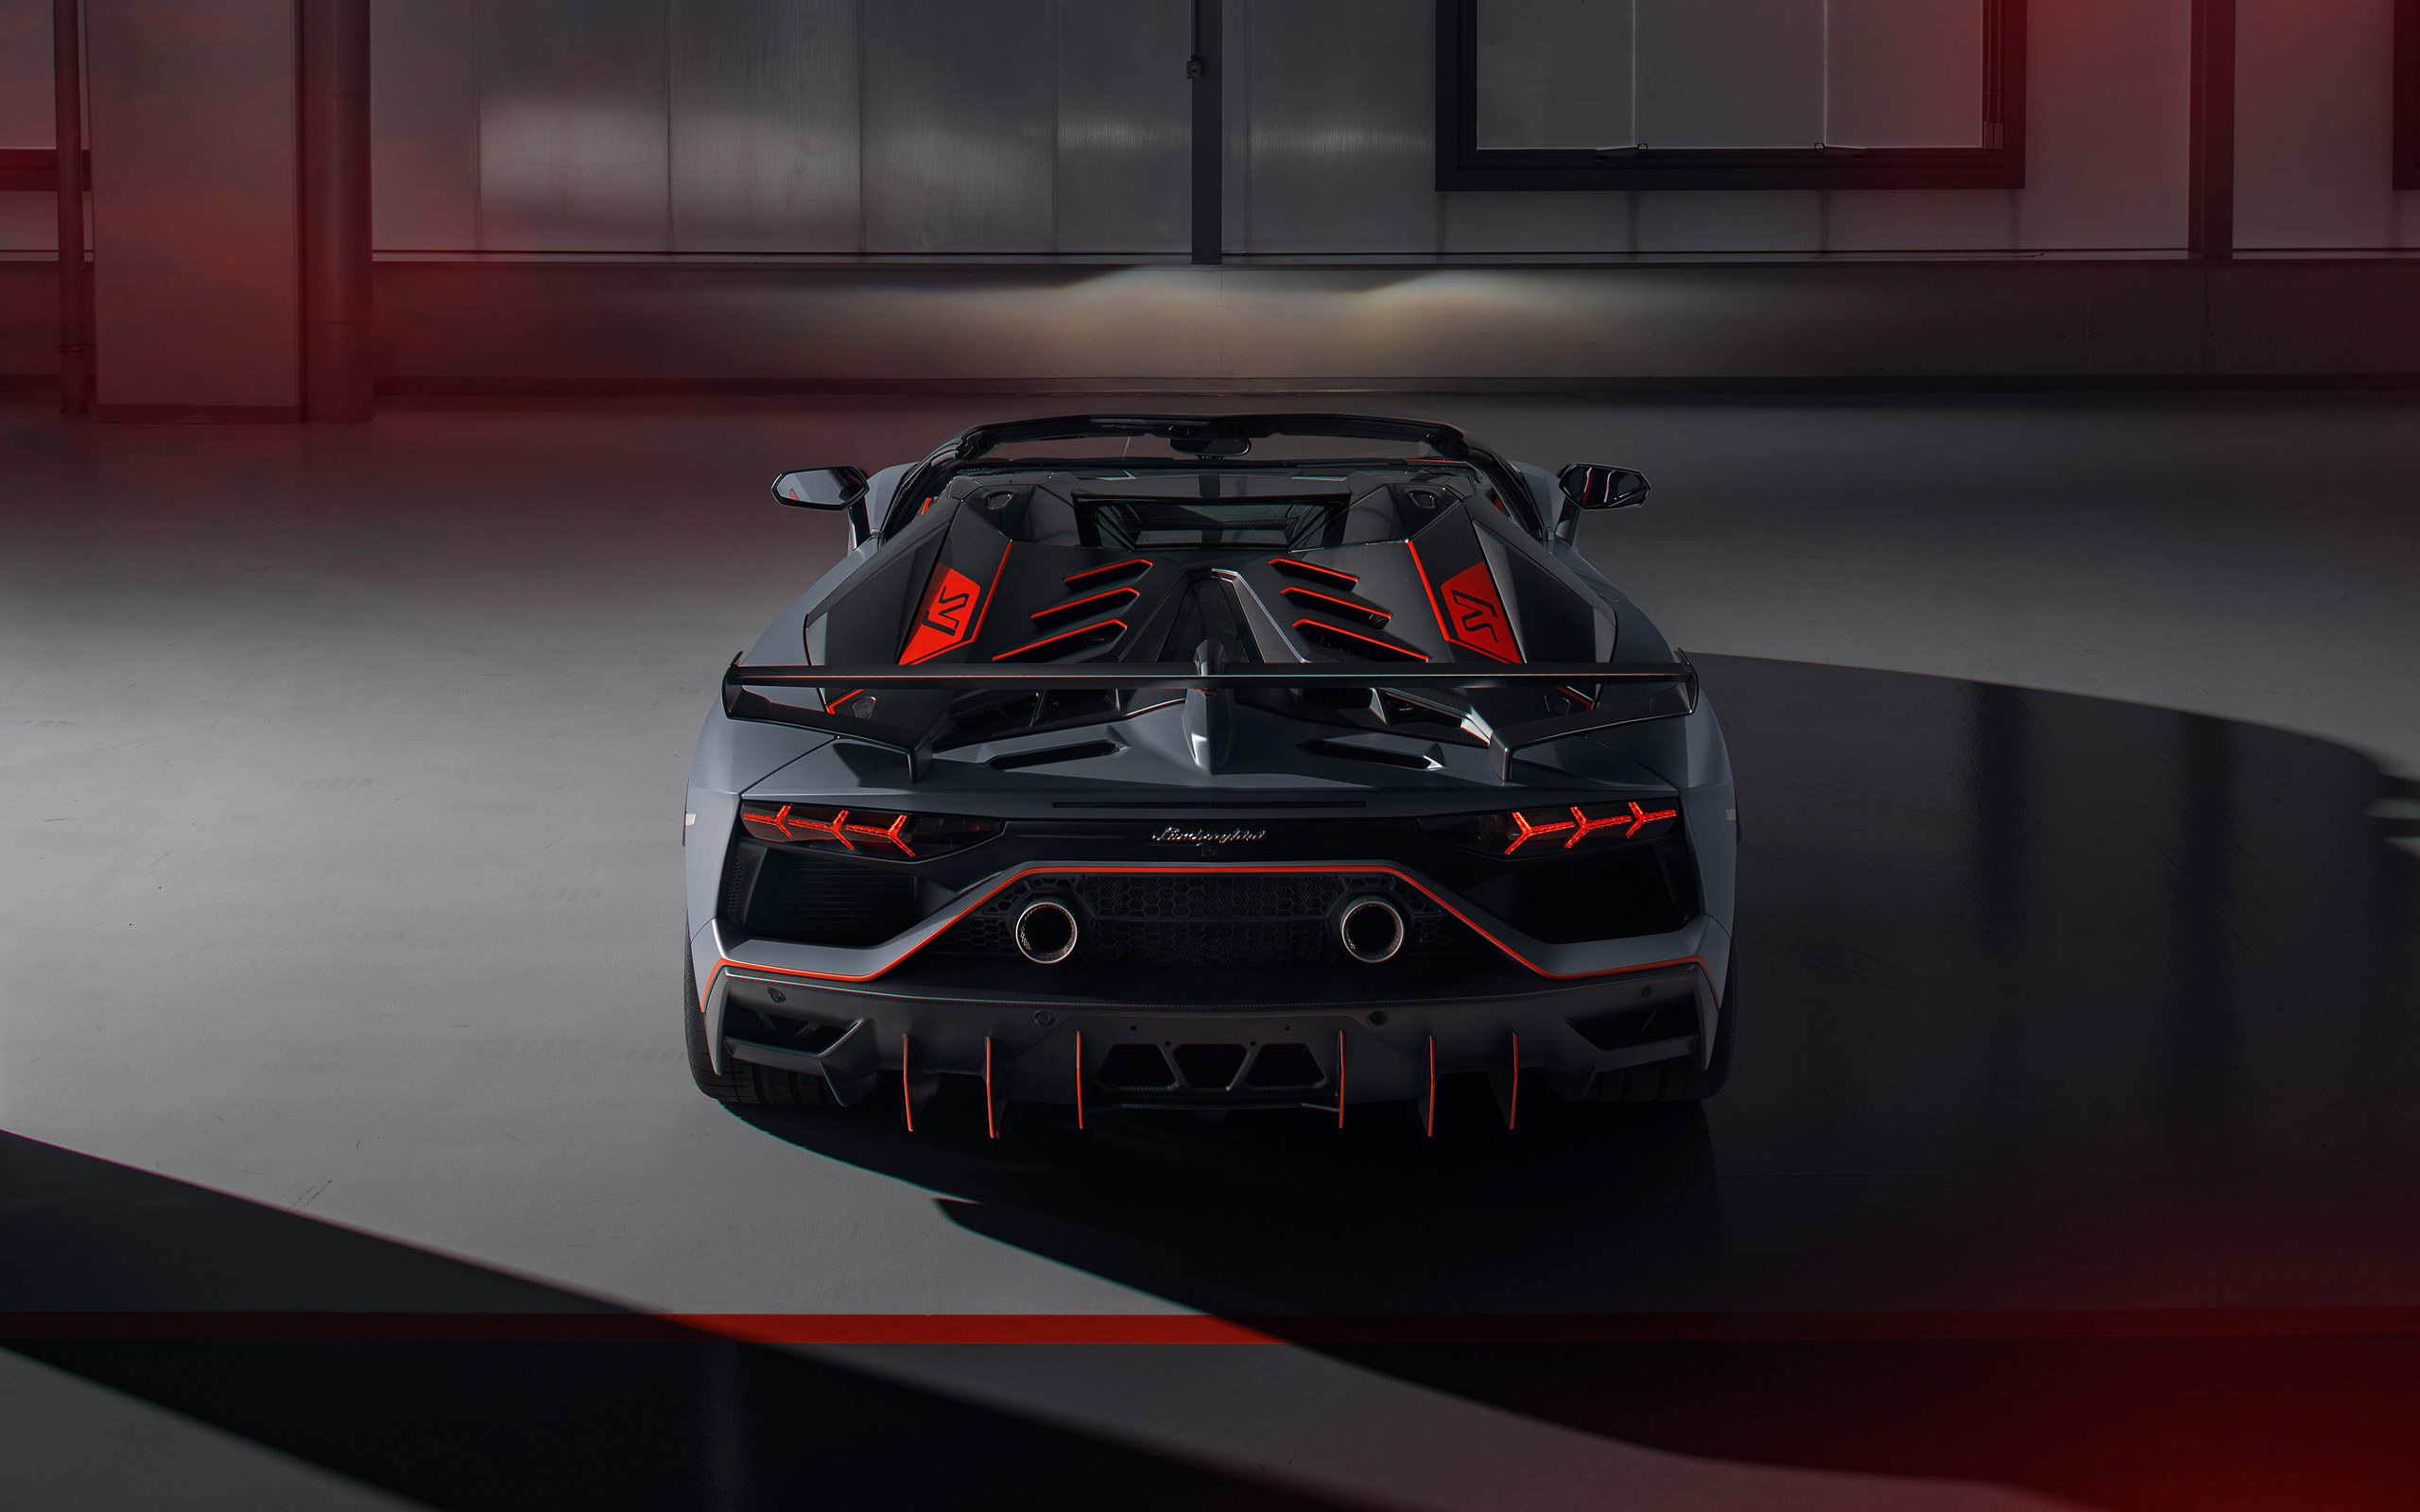  2020 Lamborghini Aventador SVJ 63 Roadster Wallpaper.